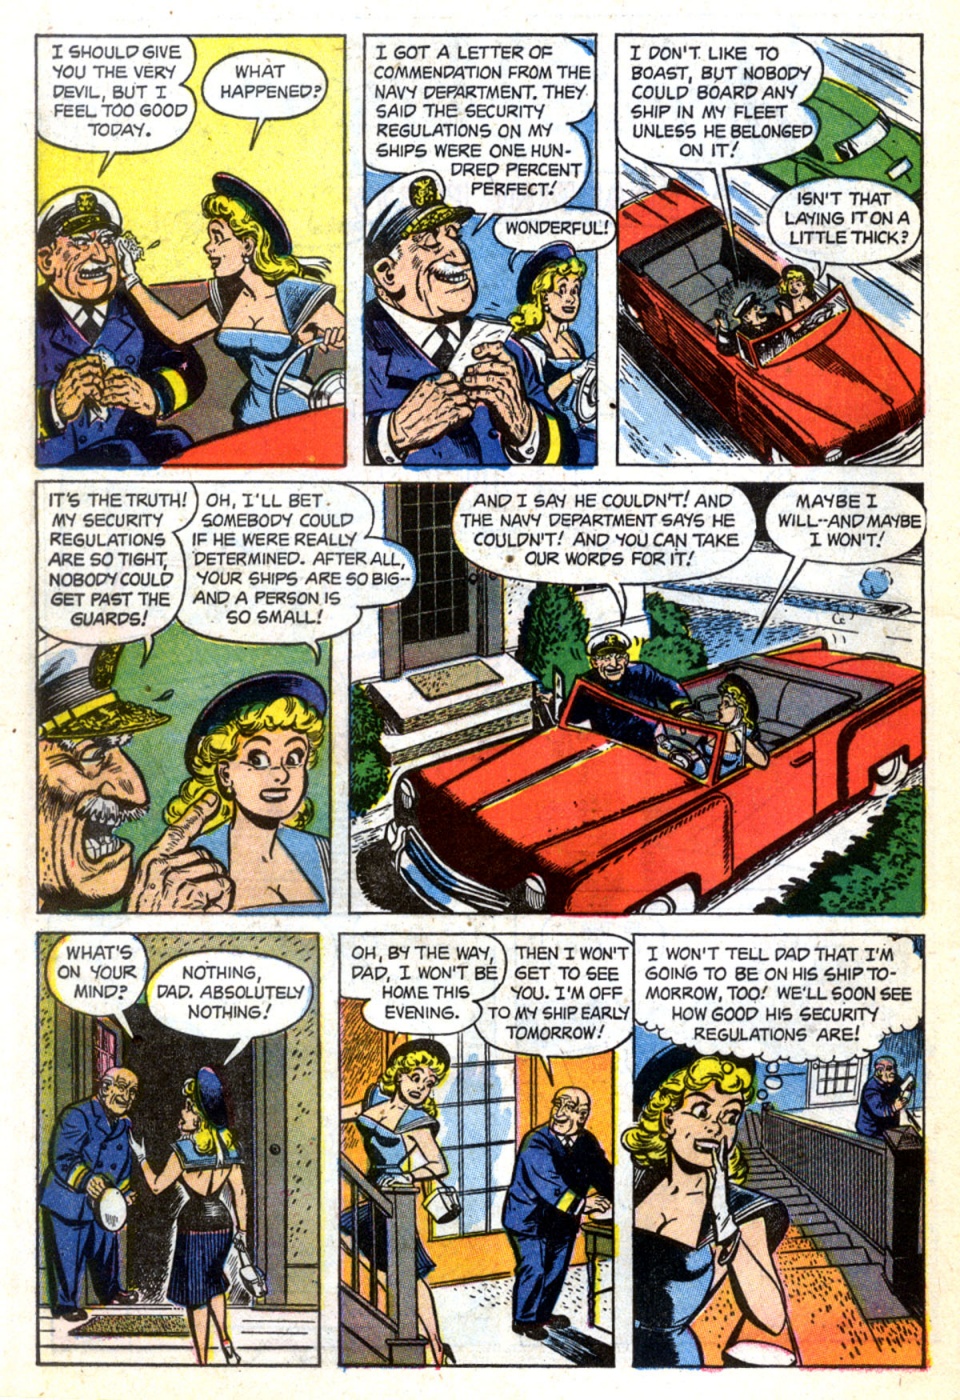 Anchors the Salt Water Daffy - Comics (c) (22)